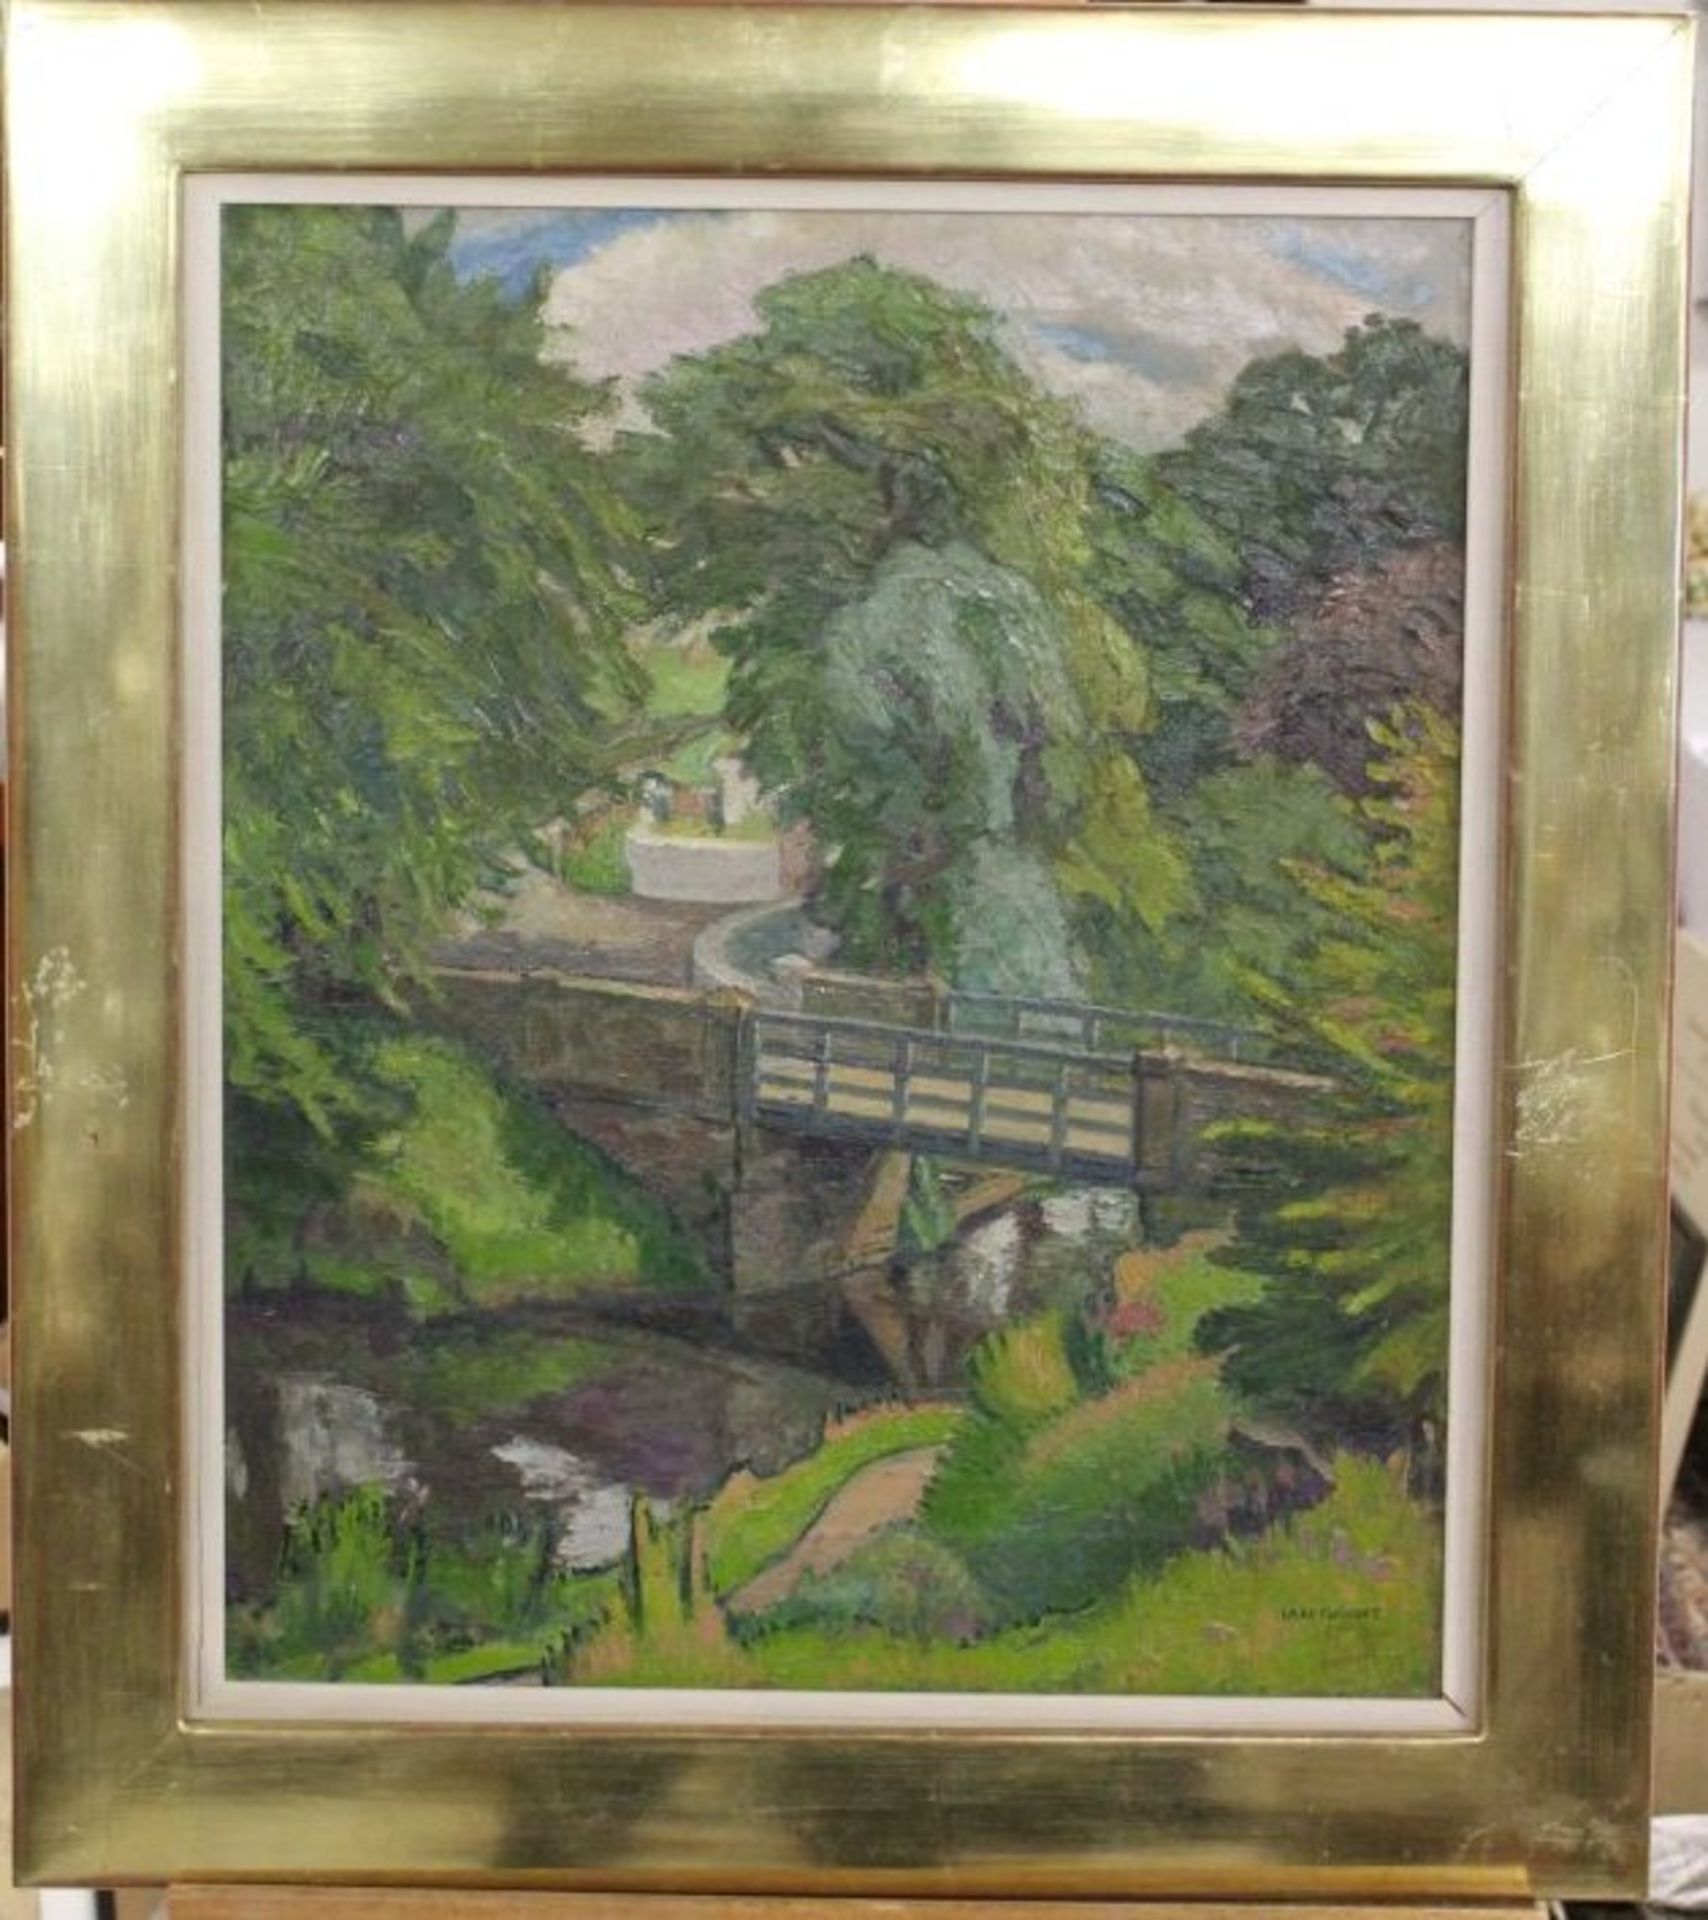 Ian McDonald GRANT (1904-1993), Brücke, Öl/Leinwand, erworben in einer Galerie in Basel 1989 für - Bild 3 aus 3